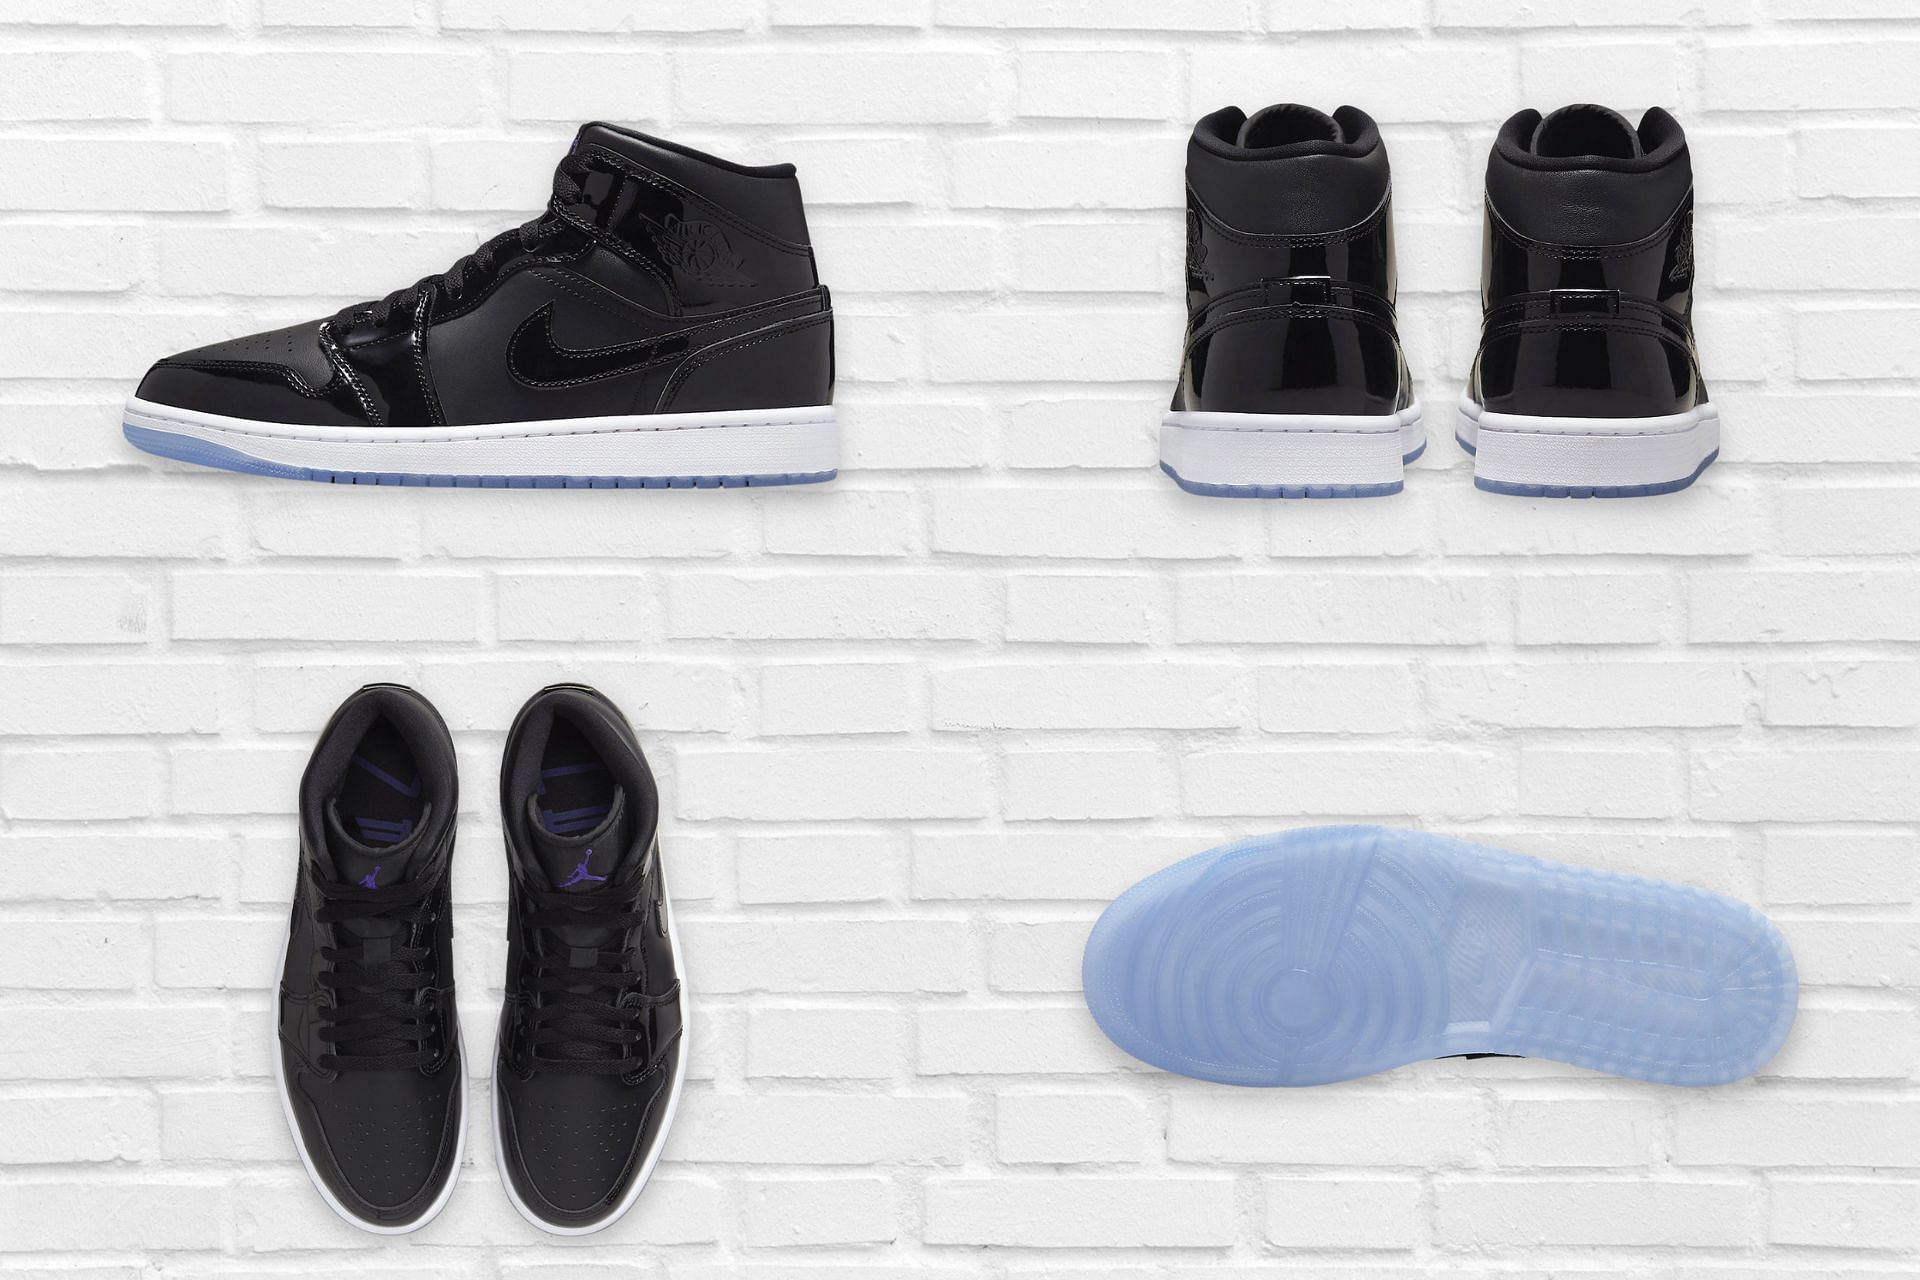 The upcoming Nike Air Jordan 1 Mid &quot;Space Jam&quot; sneakers pay homage to the 2016-released Air Jordan 11 (Image via Sportskeeda)